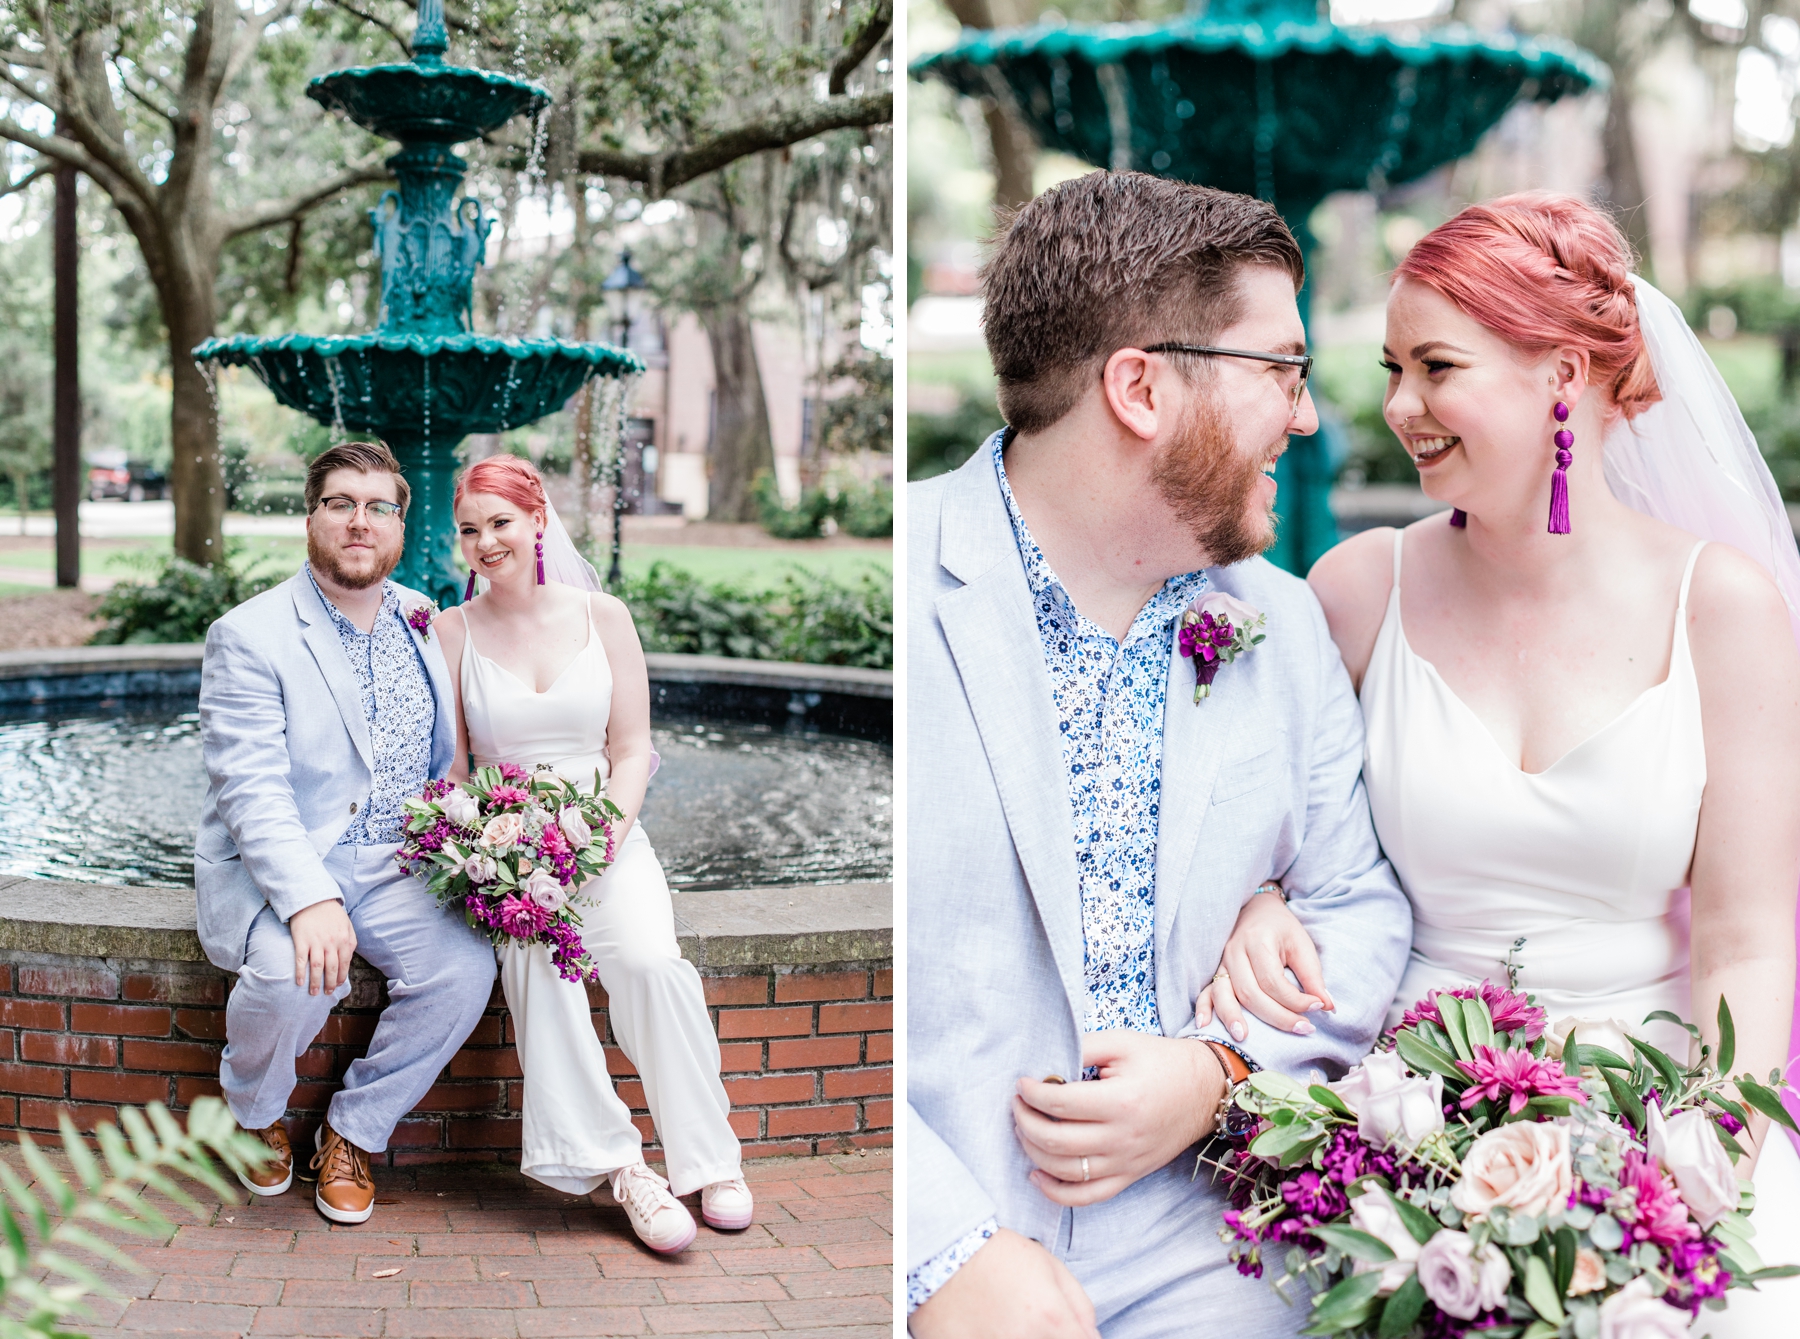 Intimate elopement in Lafayette Square, Savannah